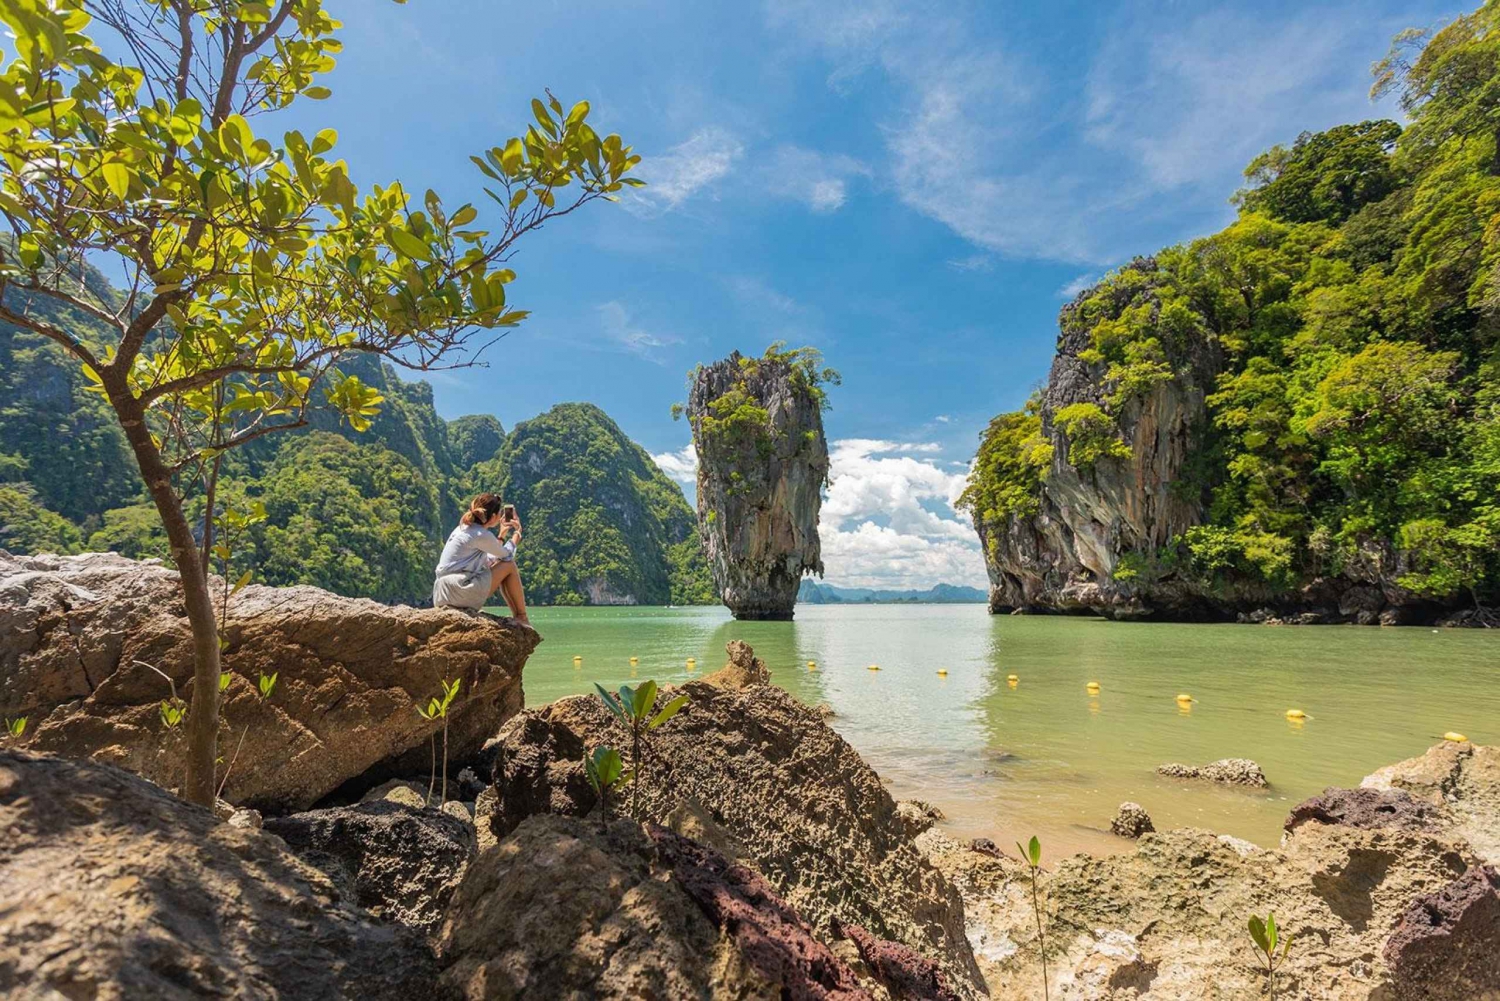 Phuket: Lazy James Bond & Yao Islands Speedboat Day Tour